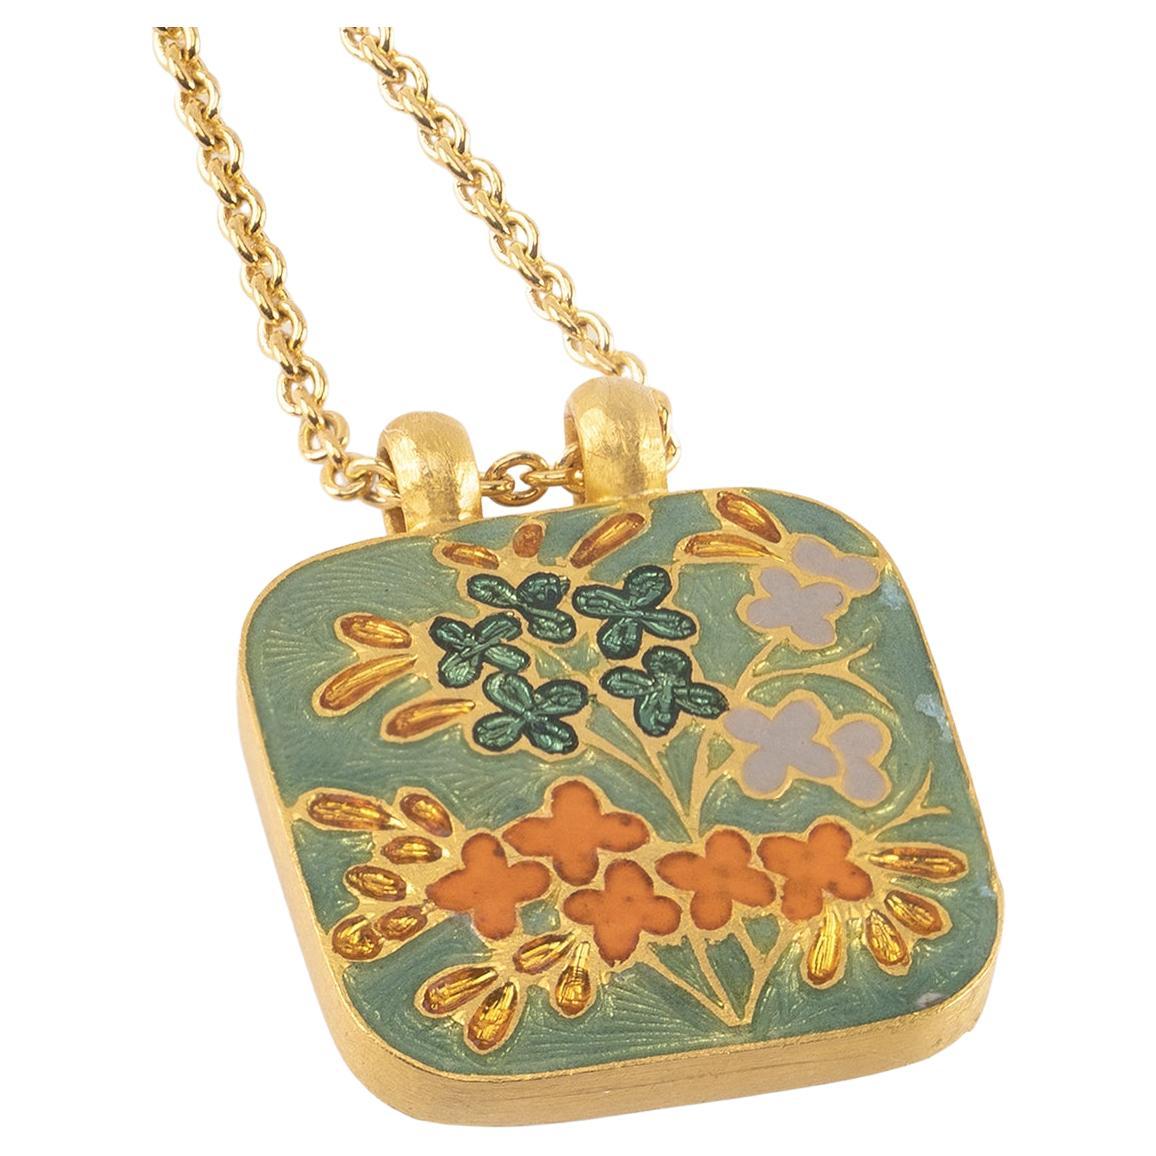 Brilliant Cut 23.5K Gold & Diamond Floral Enamel Reversible Pendant Necklace Handmade by Agaro